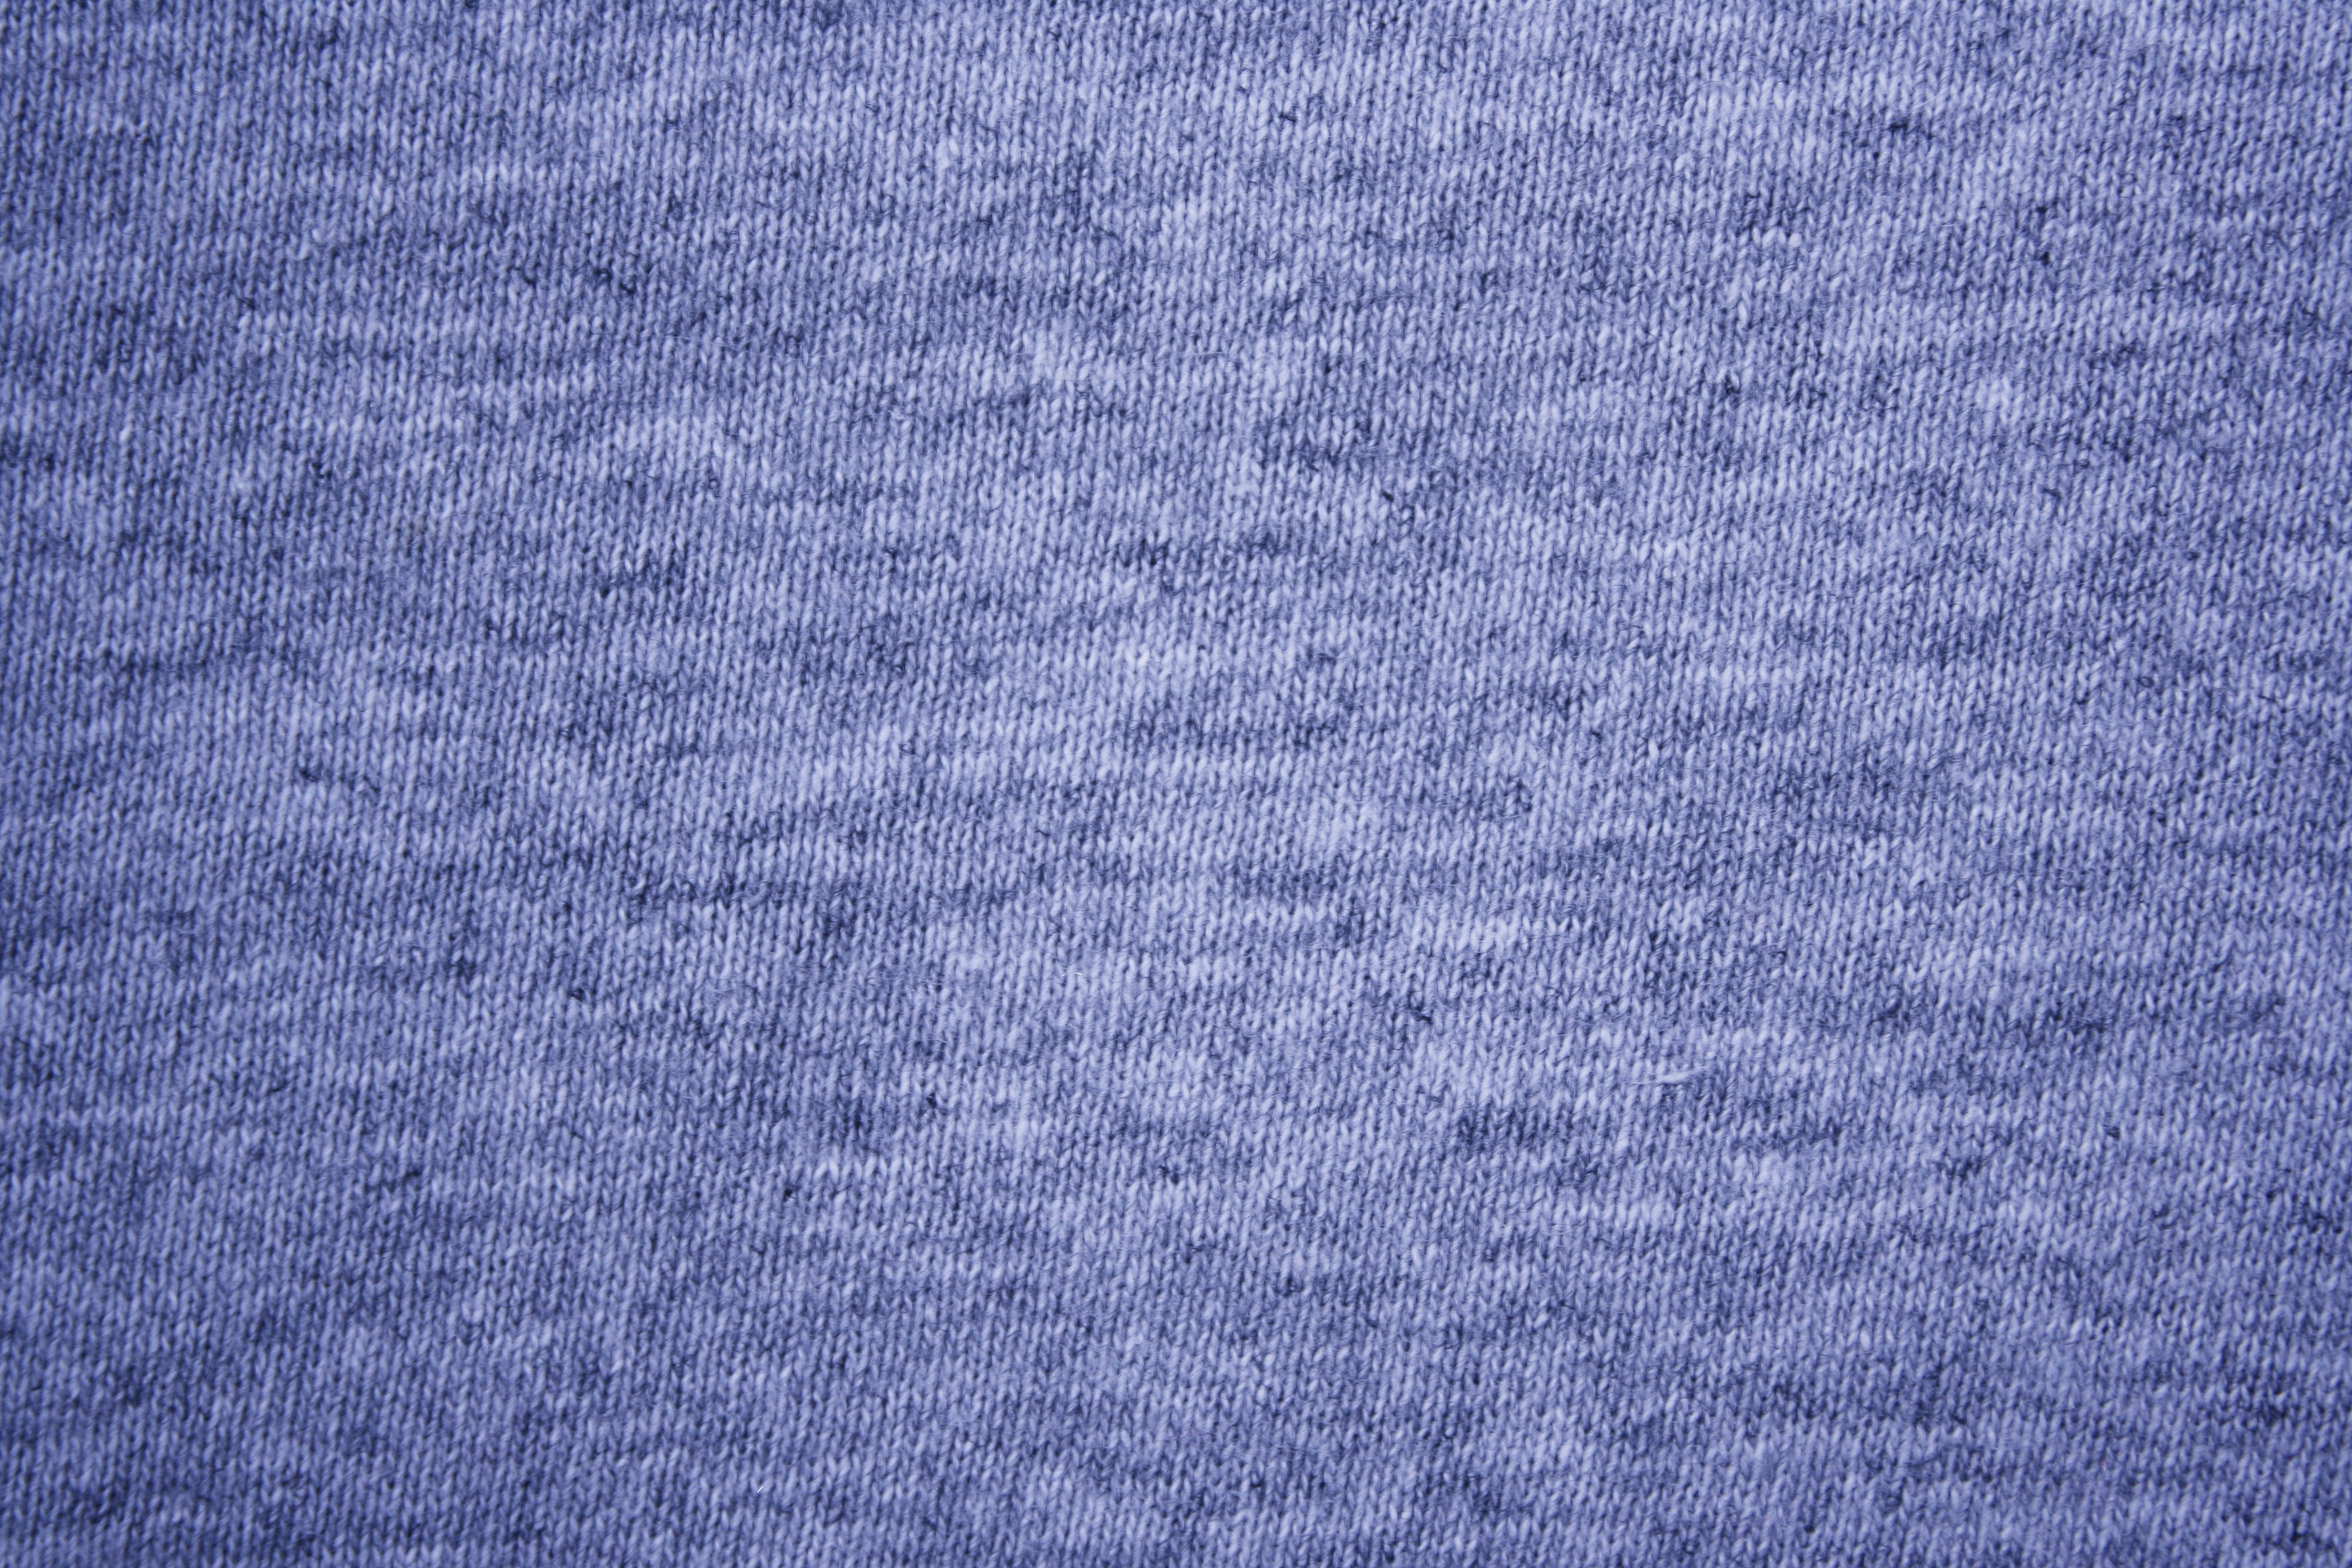 Peruvian GOTS Organic Cotton Pima 1x1 Rib Fabric (Indigo Heather